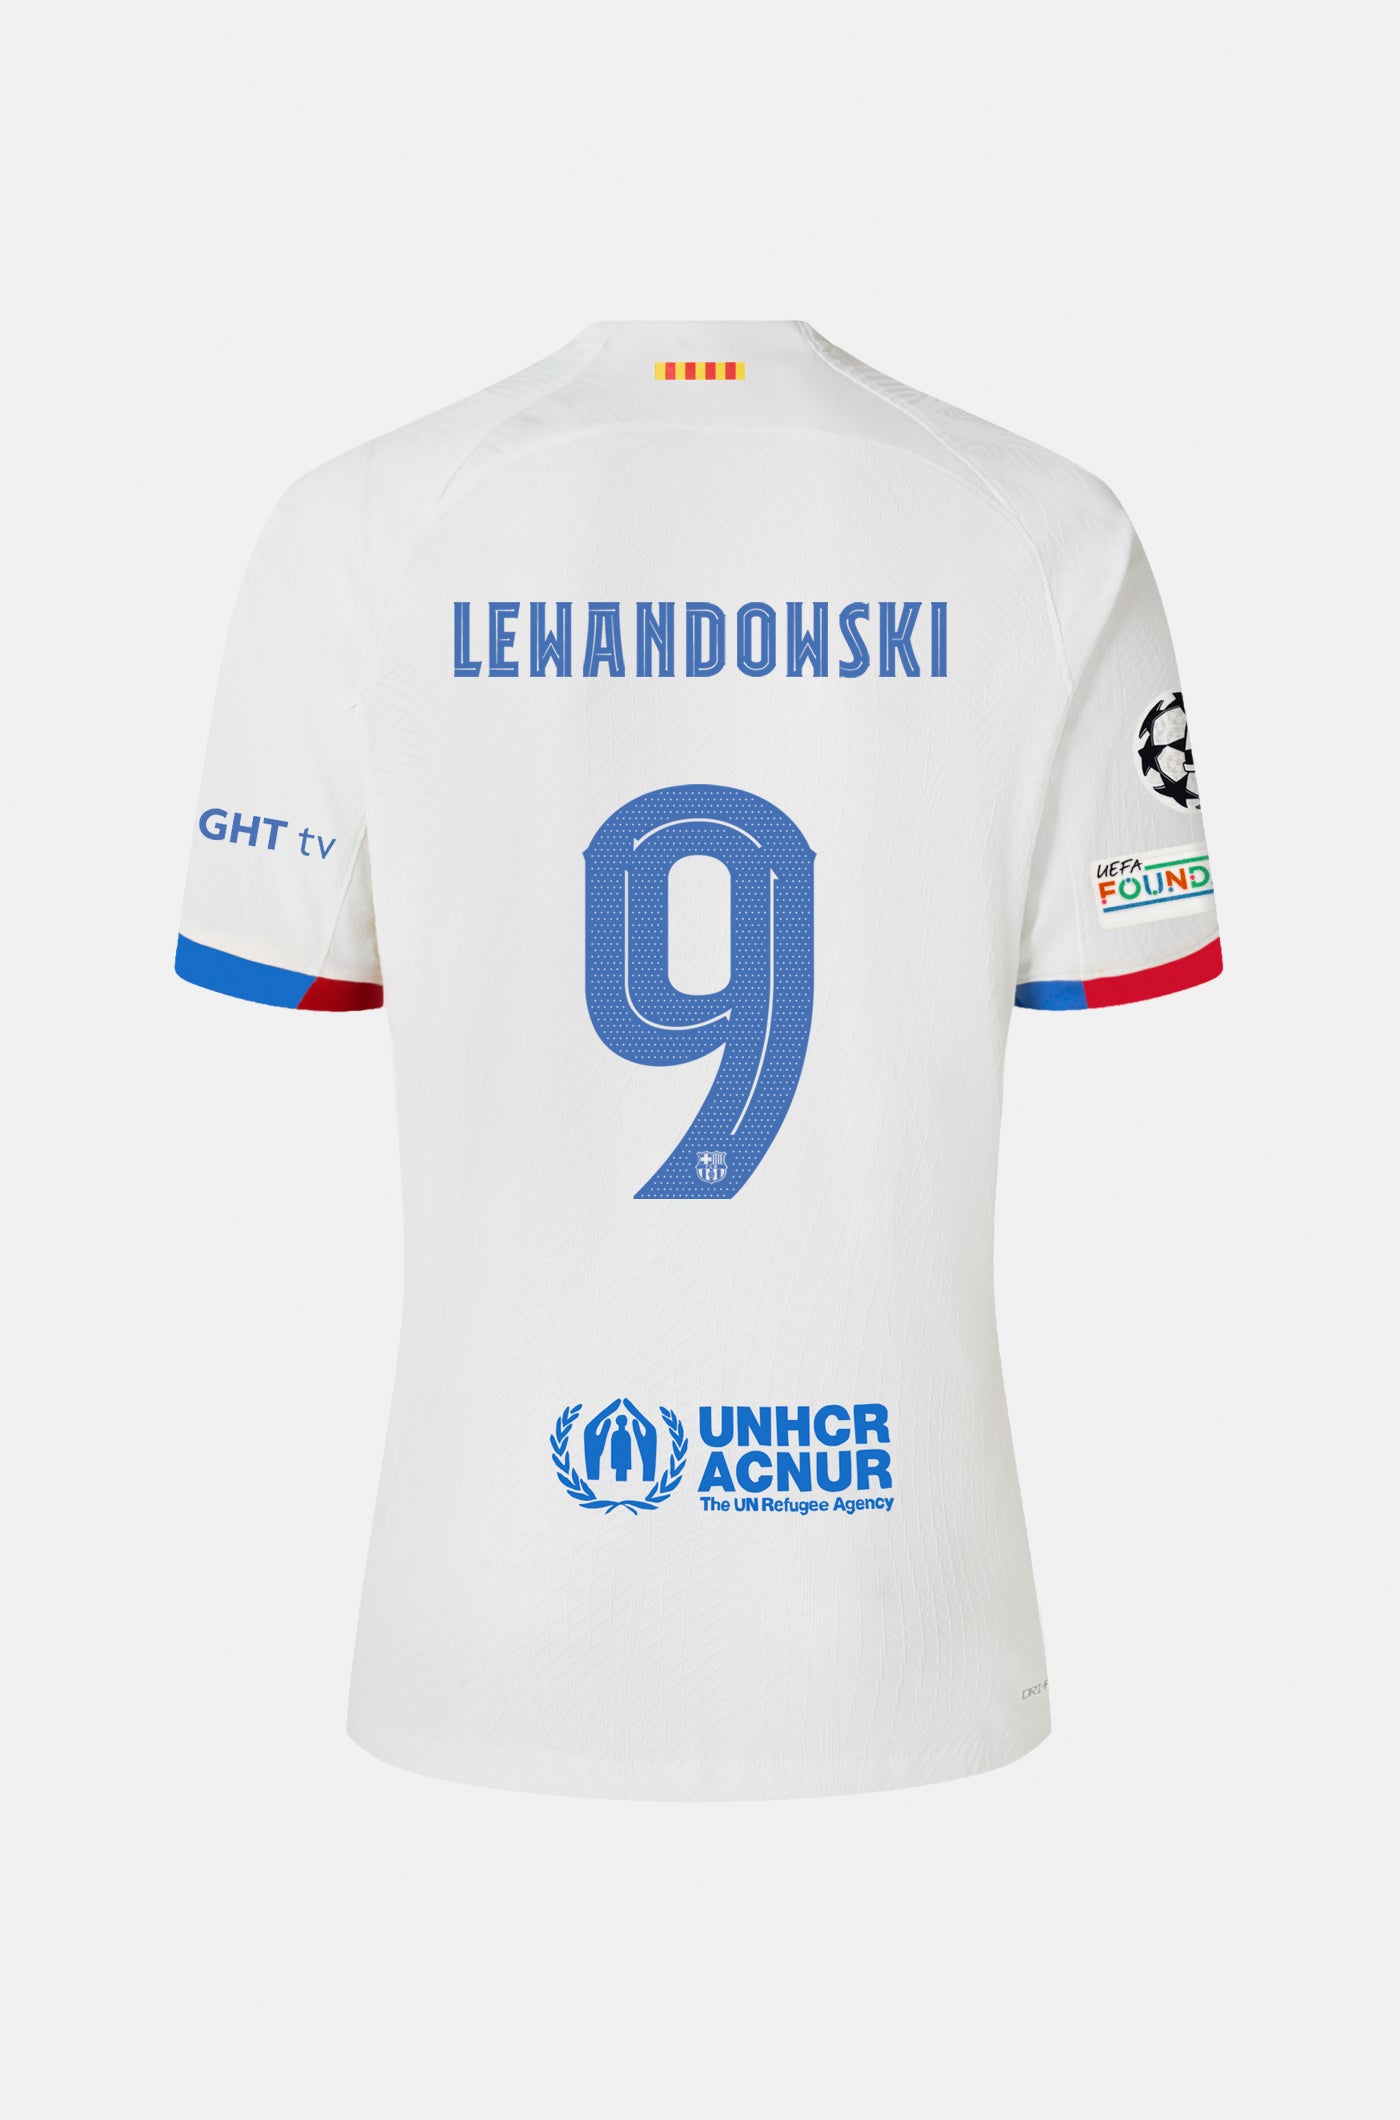 UCL FC Barcelona away shirt 23/24 Player’s Edition - LEWANDOWSKI